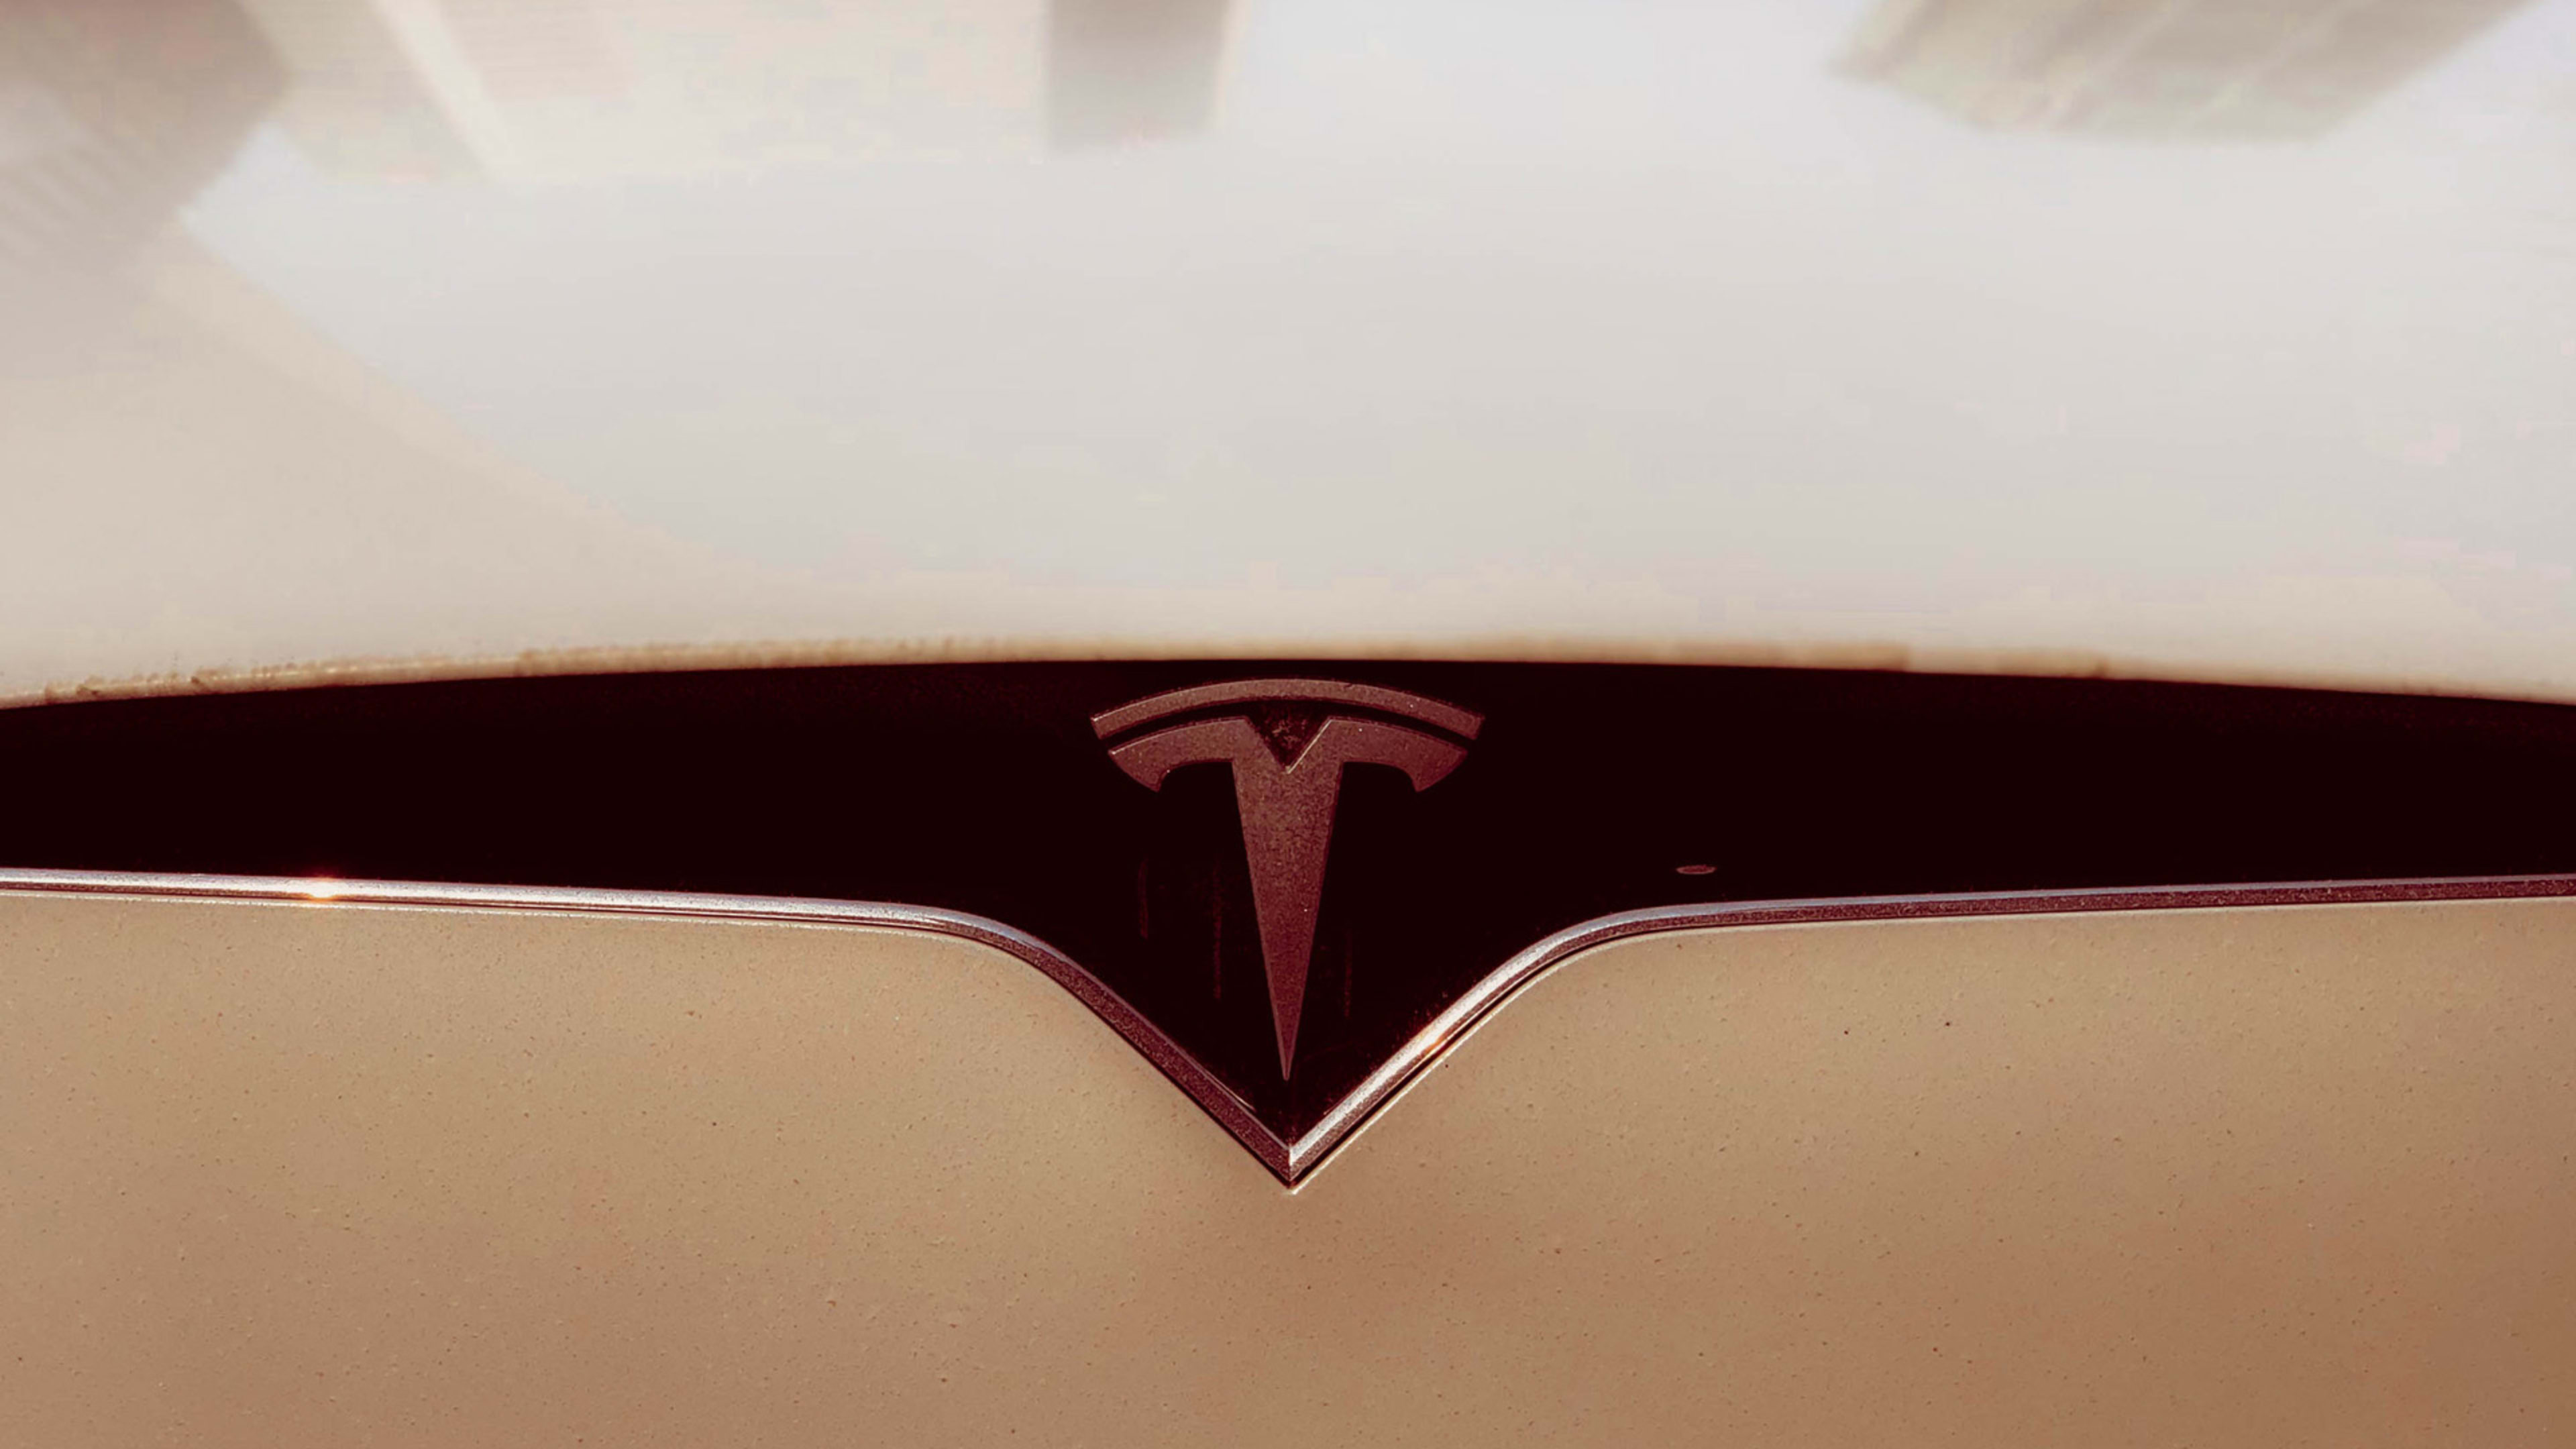 Tesla batteries last longer than expected